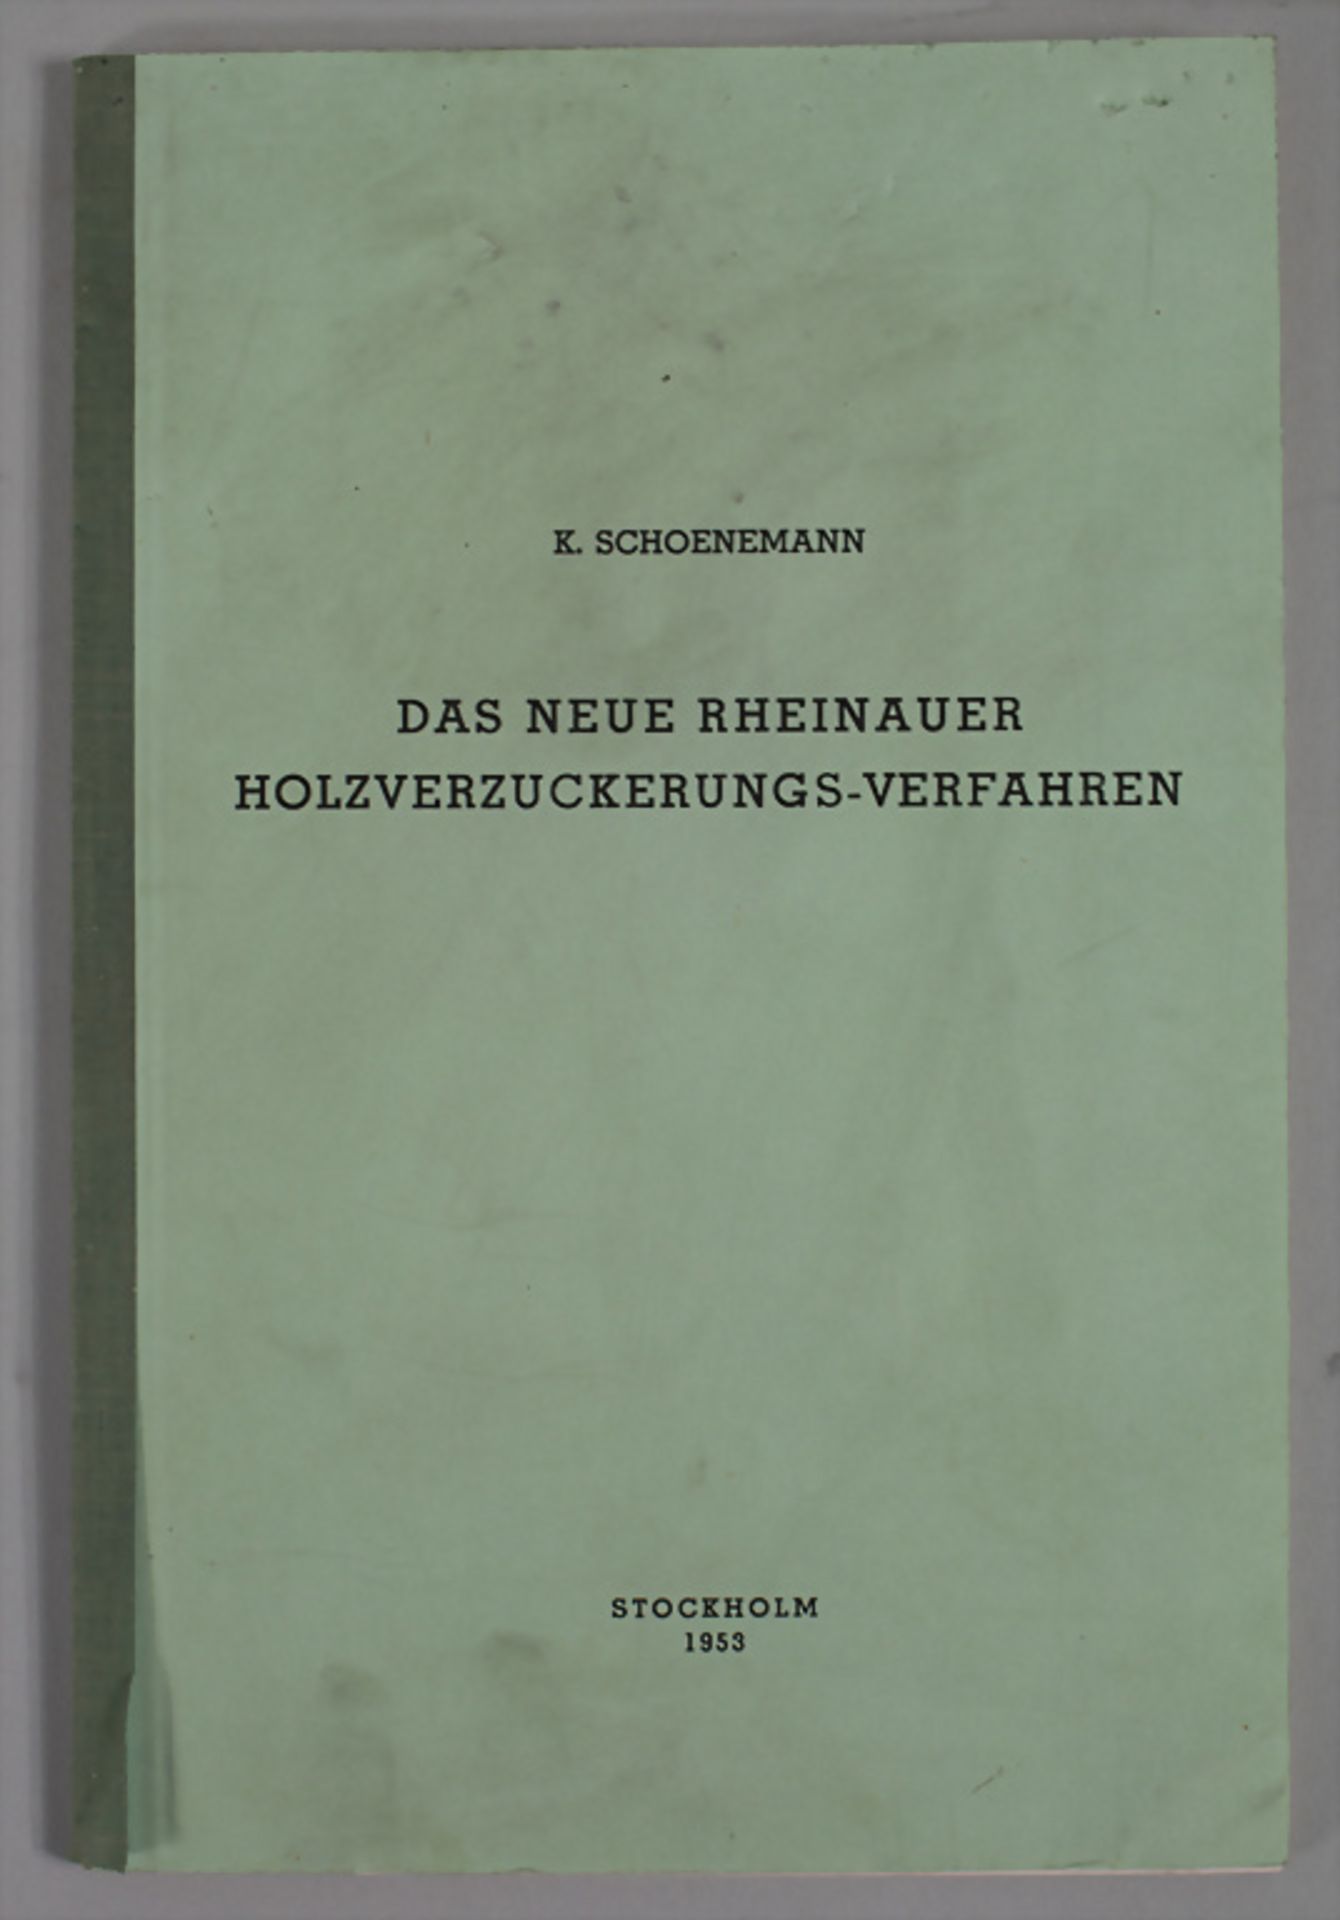 Patente der Holzhydrolyse Aktiengesellschaft Mannheim-Rheinau, um 1940 - Image 5 of 7